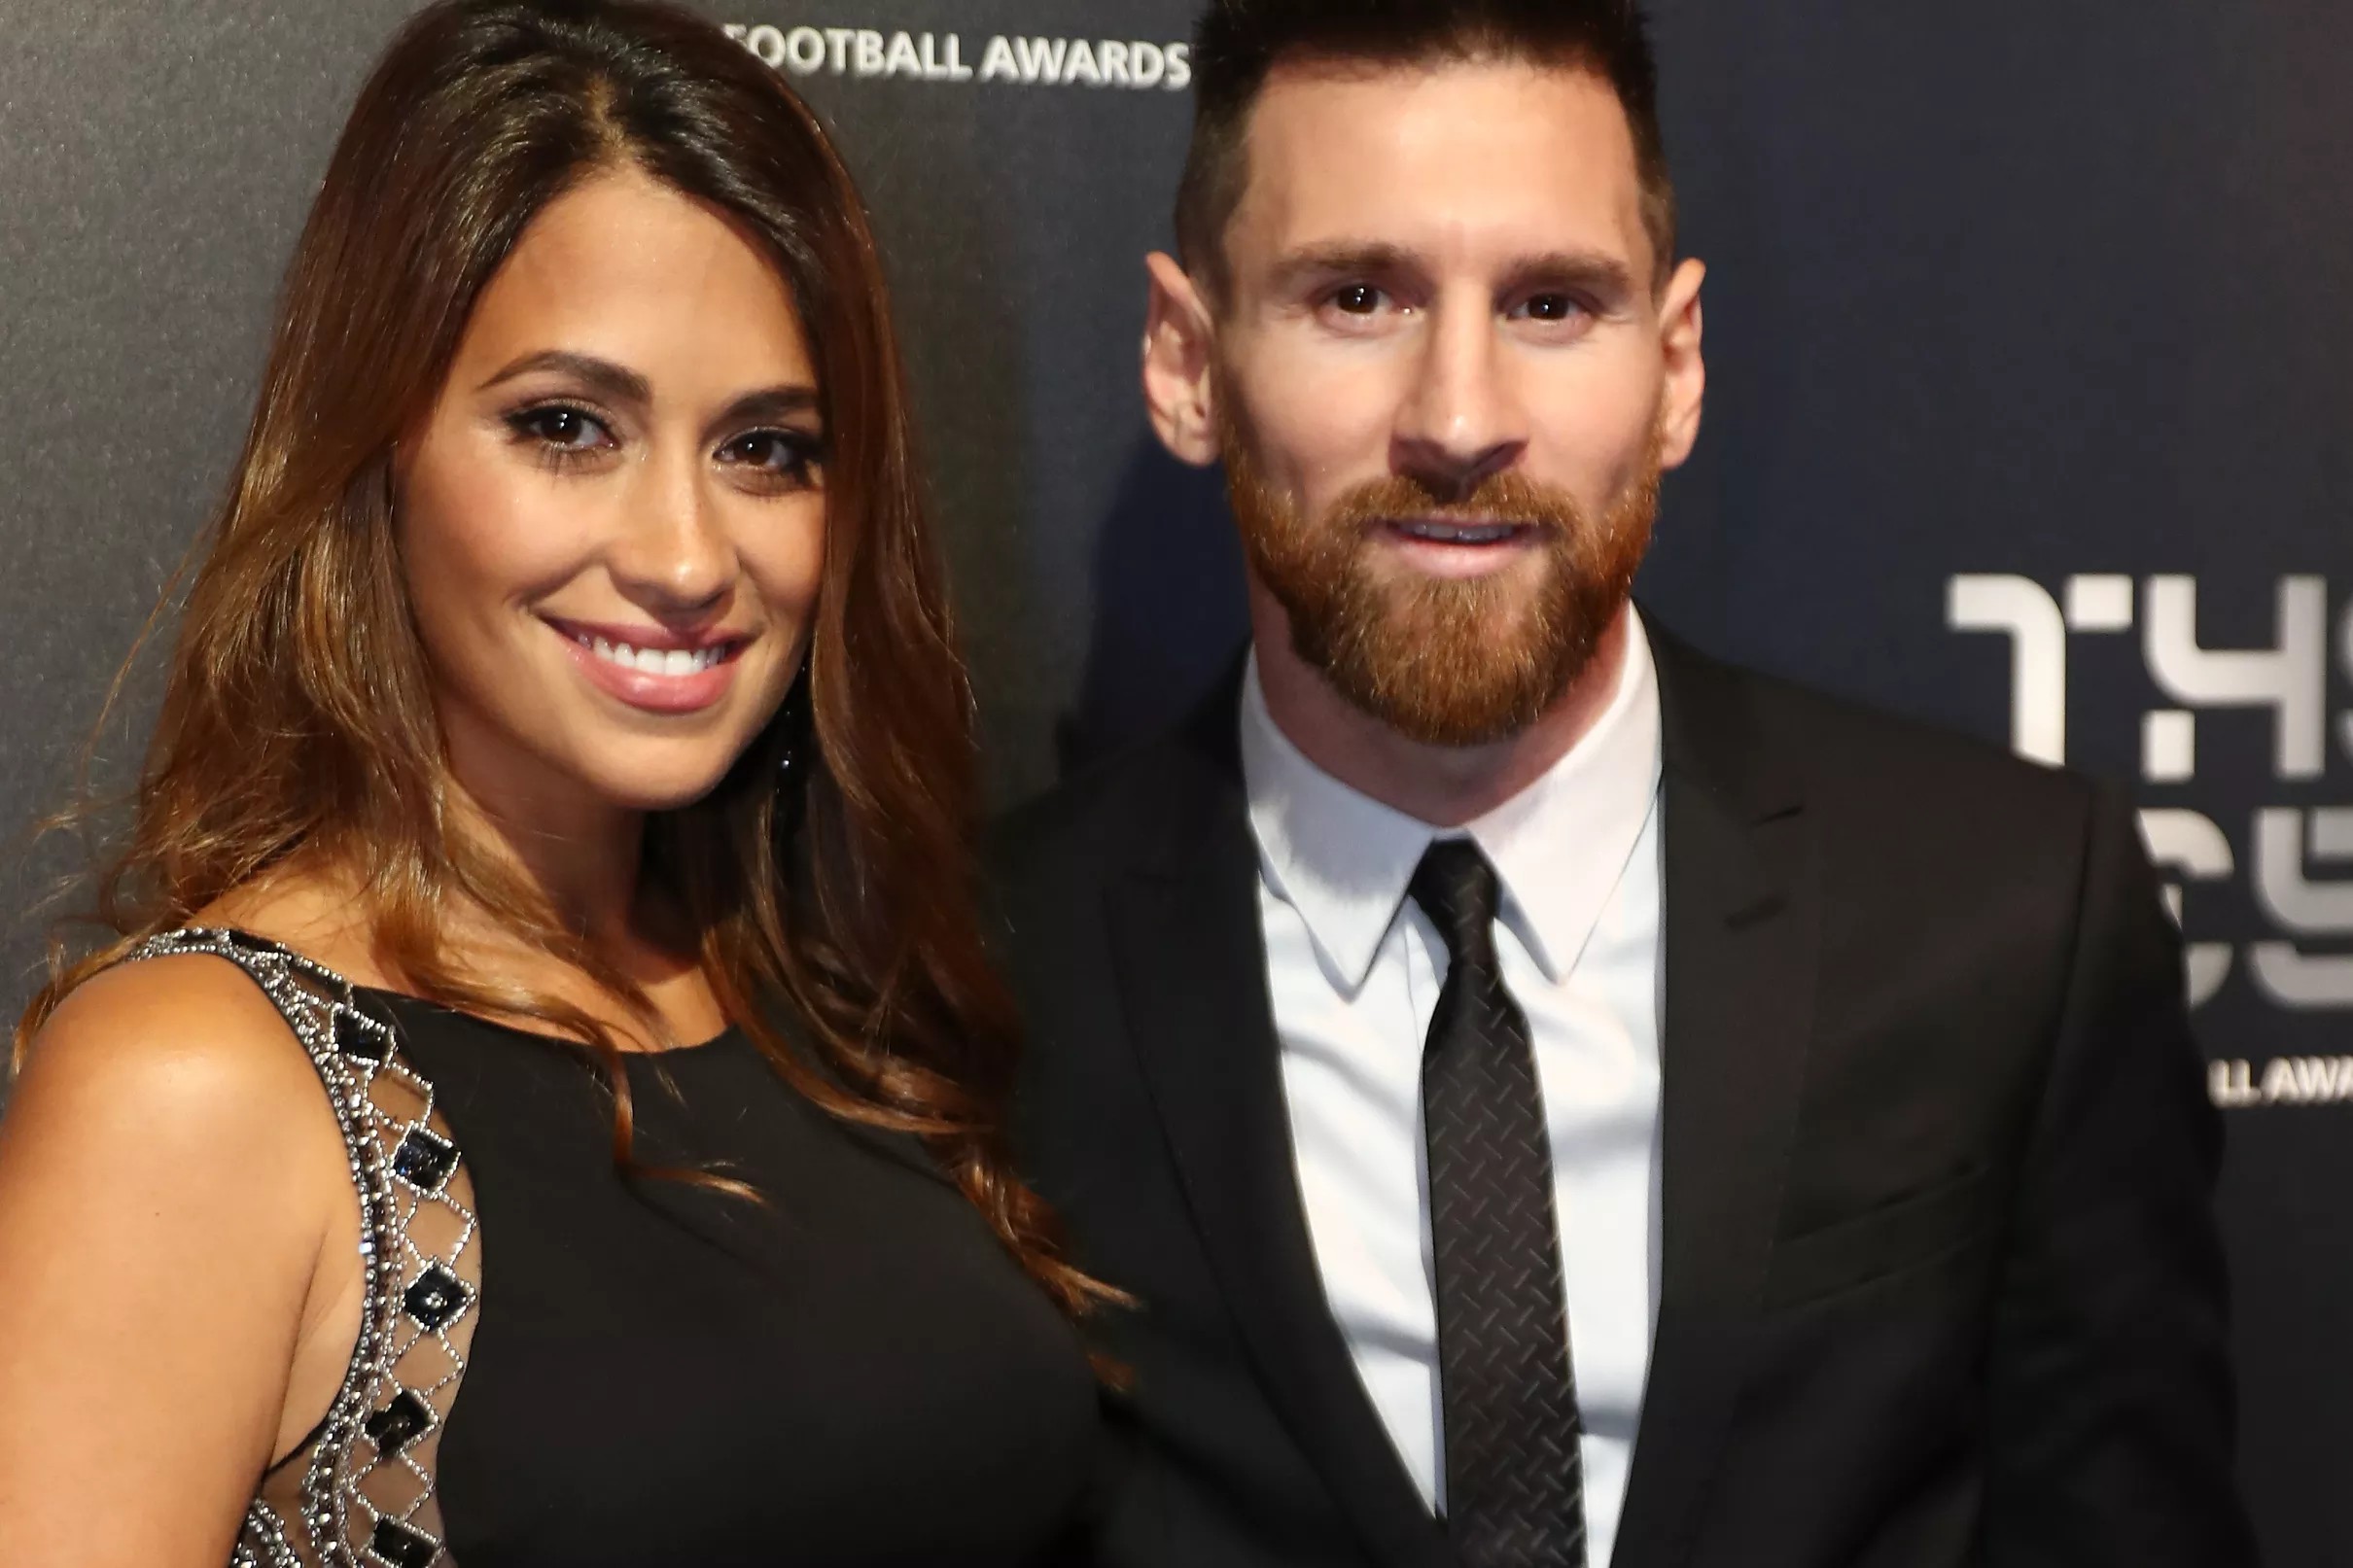 Lionel Messi wins prestigious award from Catalan government